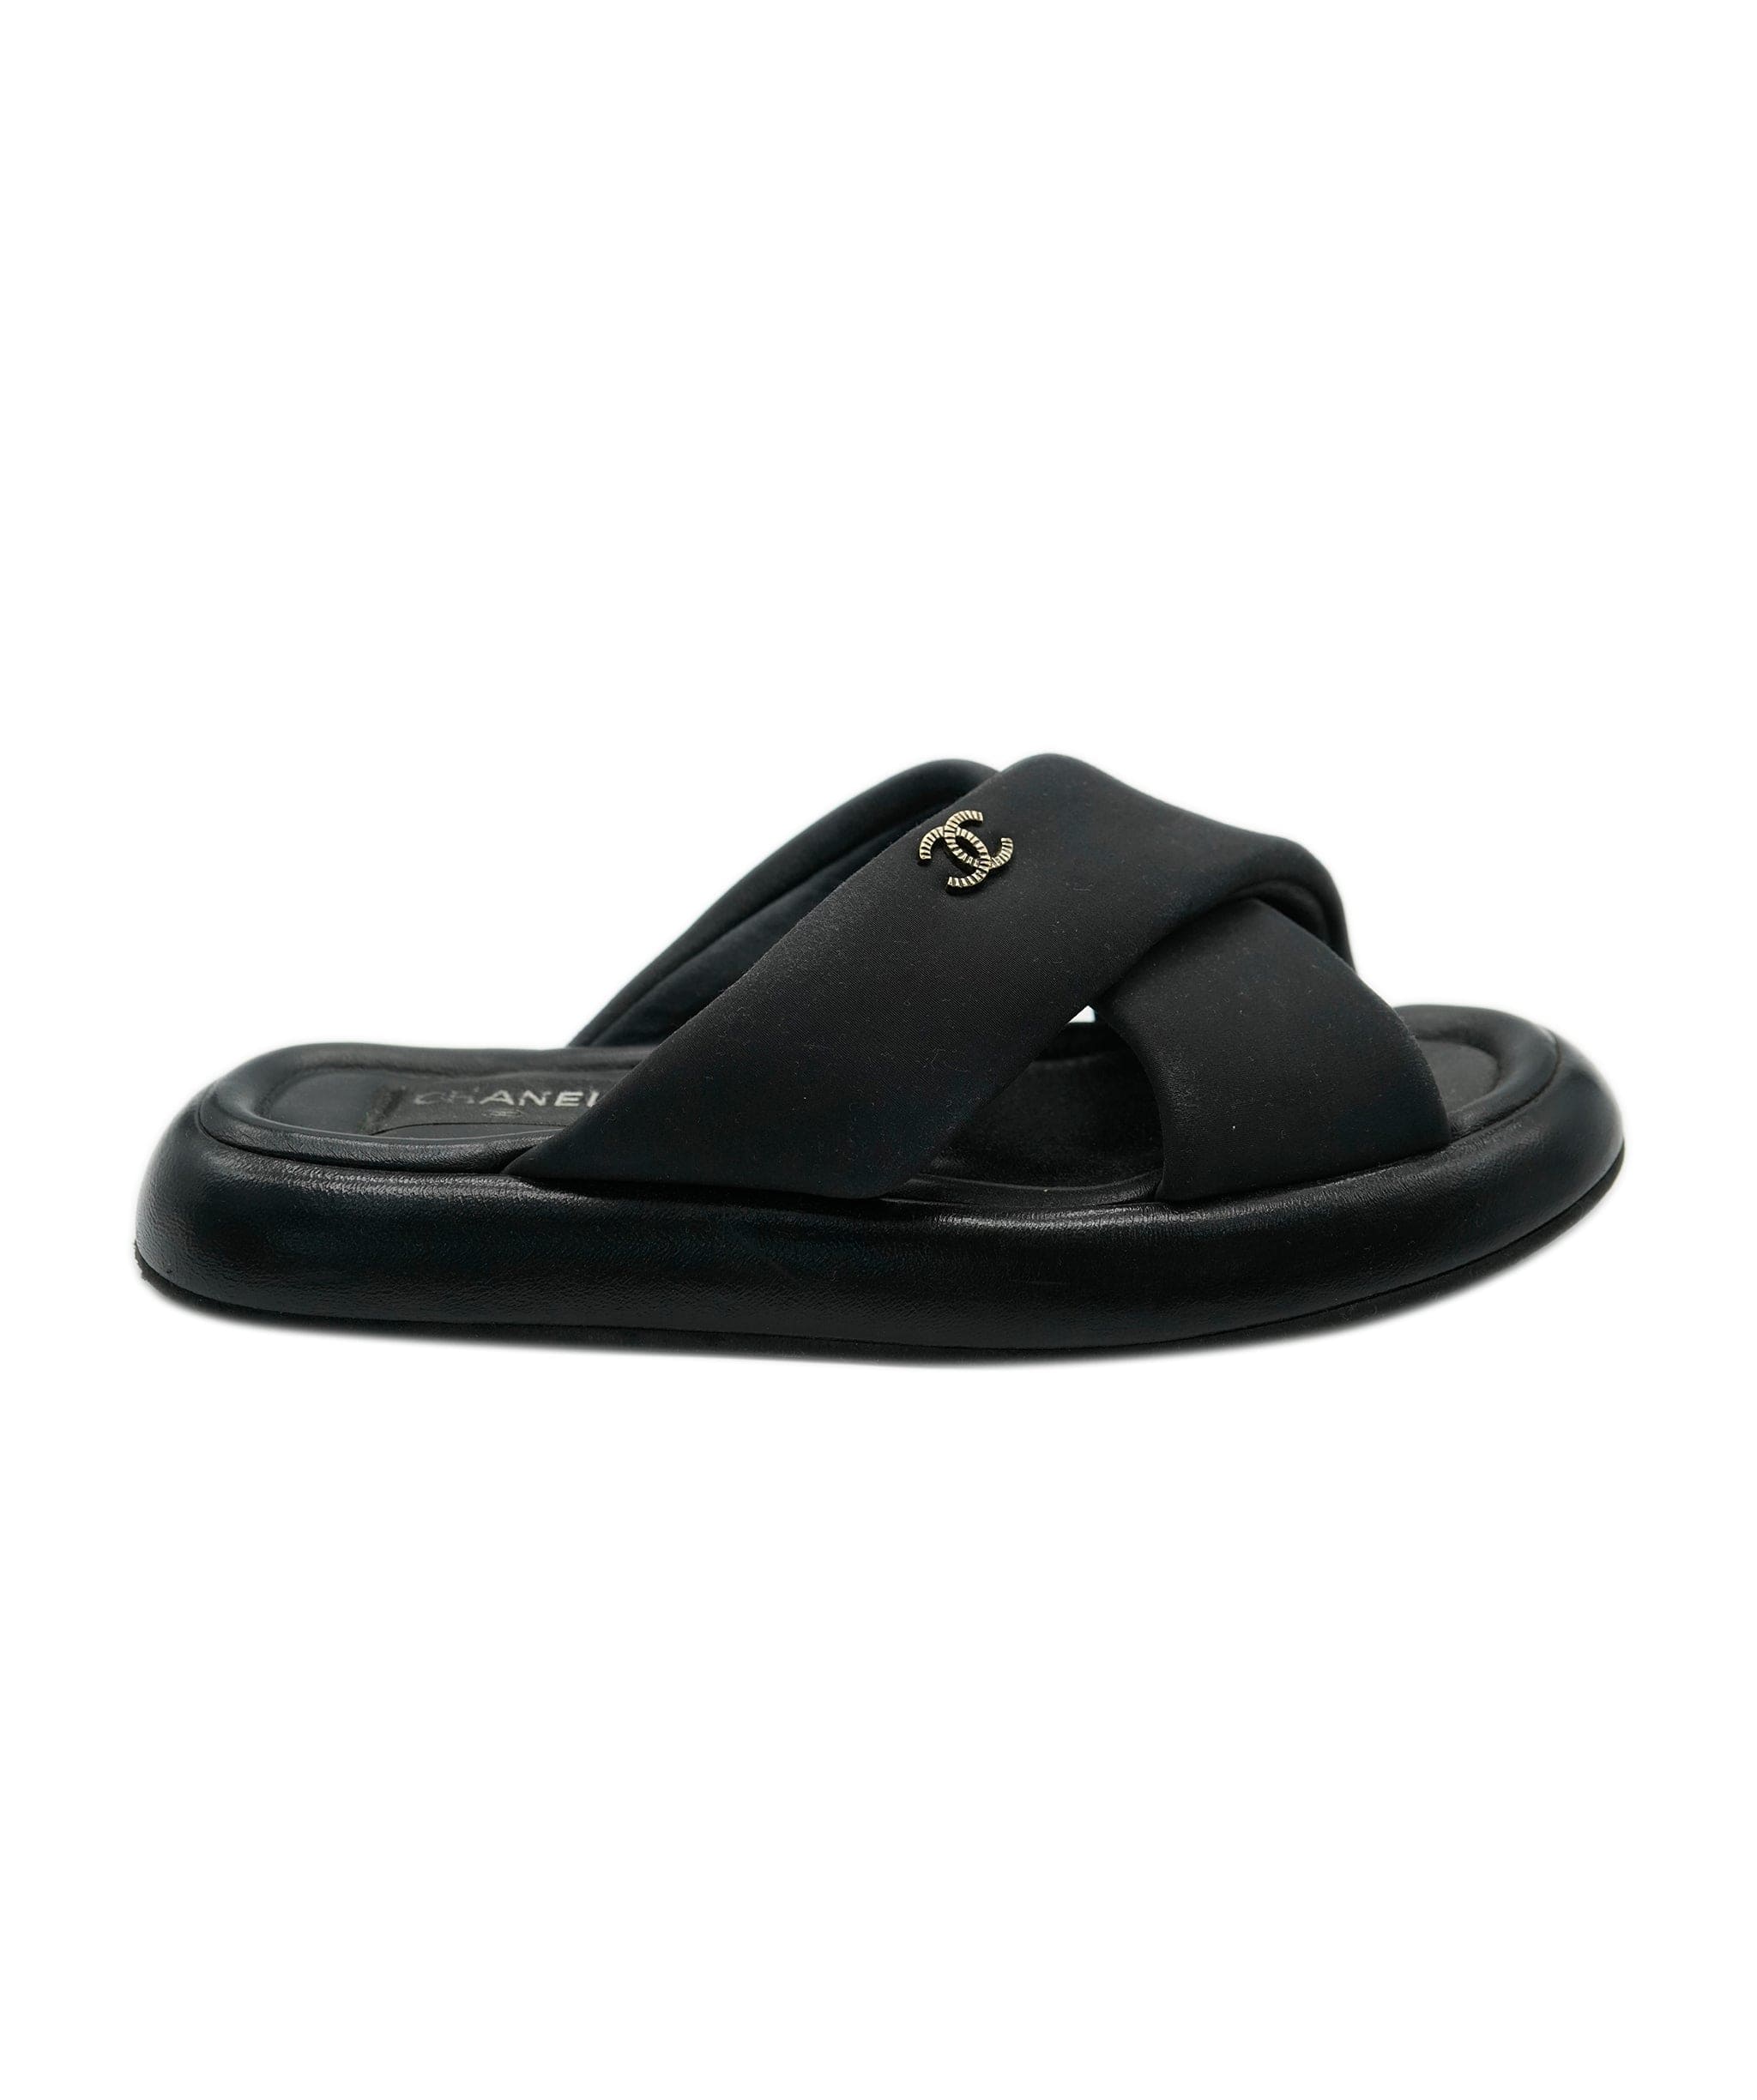 Chanel Chanel Slippers black 40 ASC4872